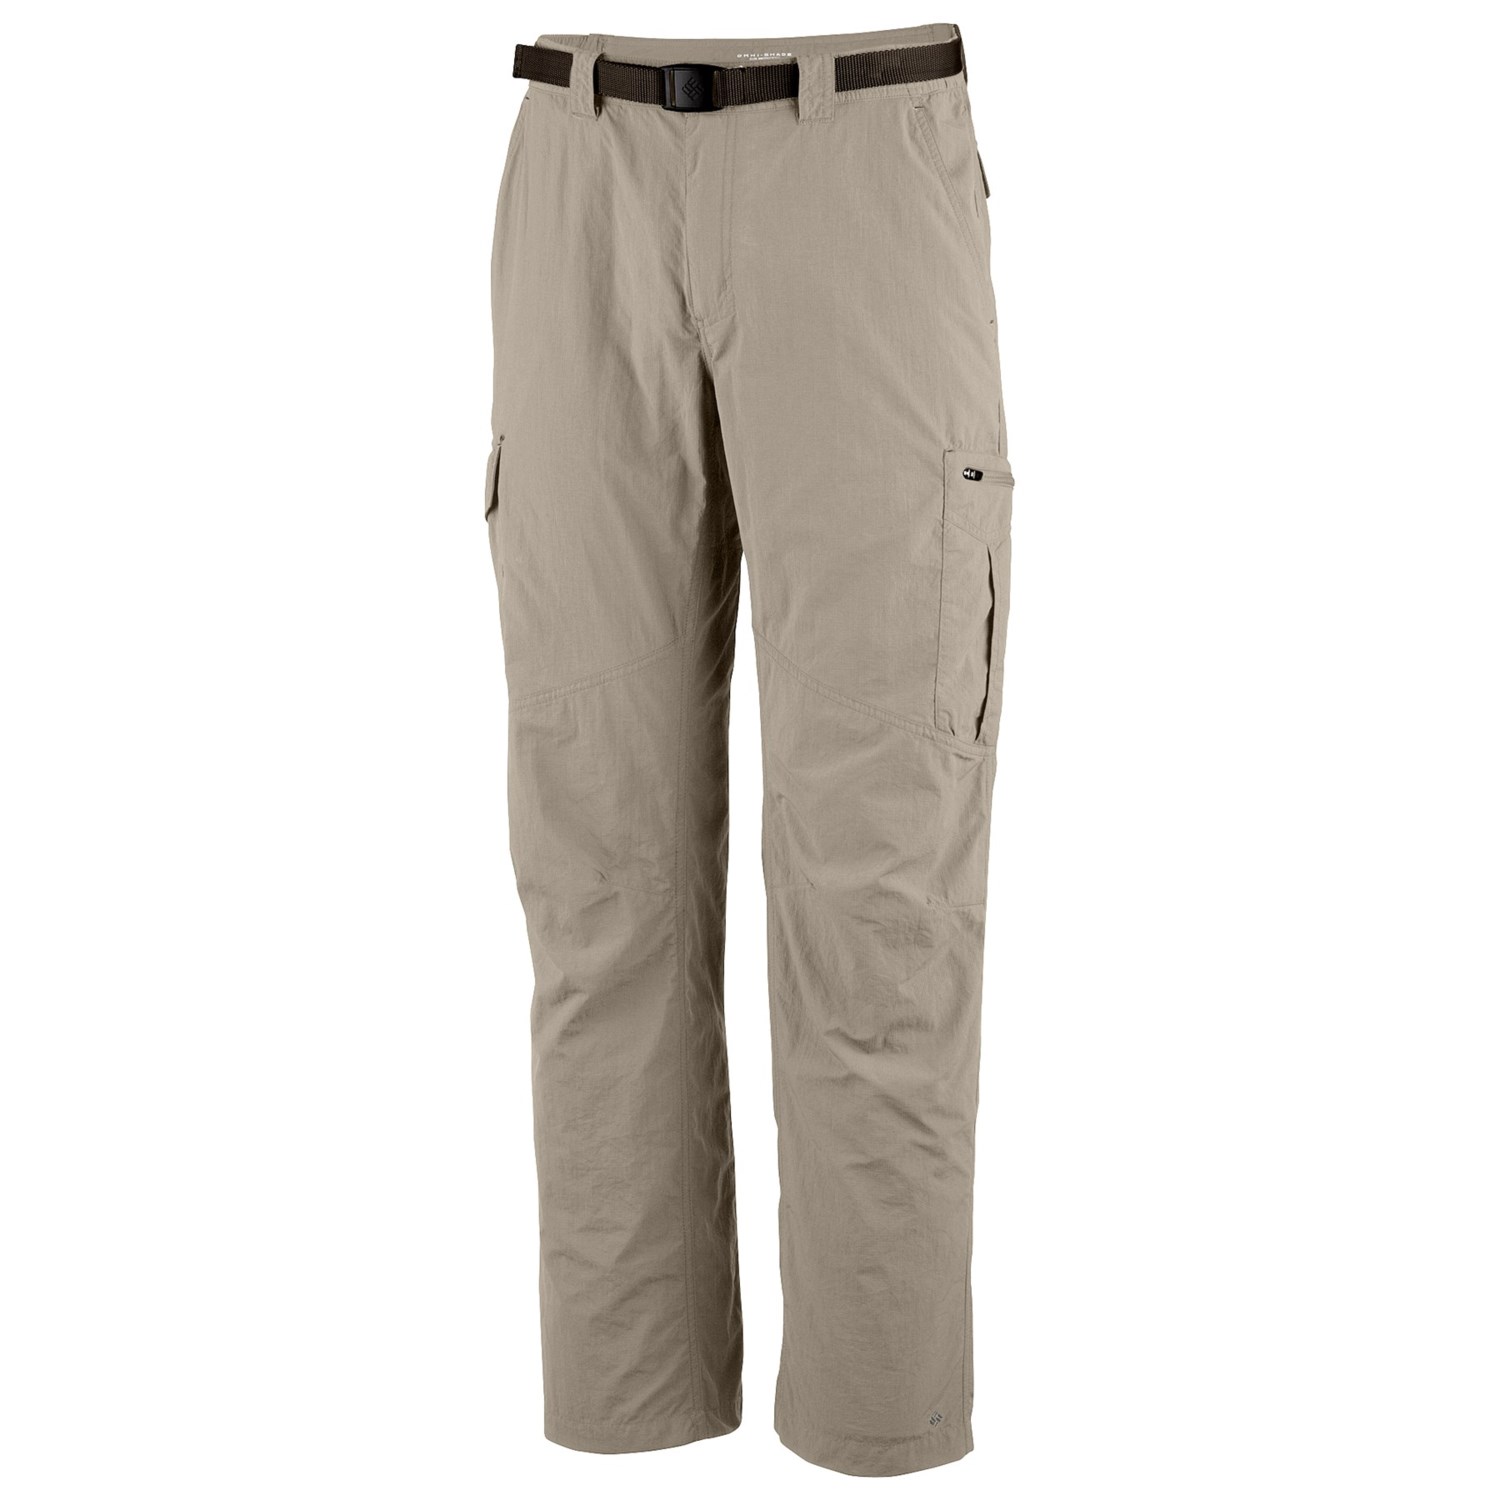 Columbia Sportswear Silver Ridge Cargo Pants - UPF 50 (For Tall Men) in ...